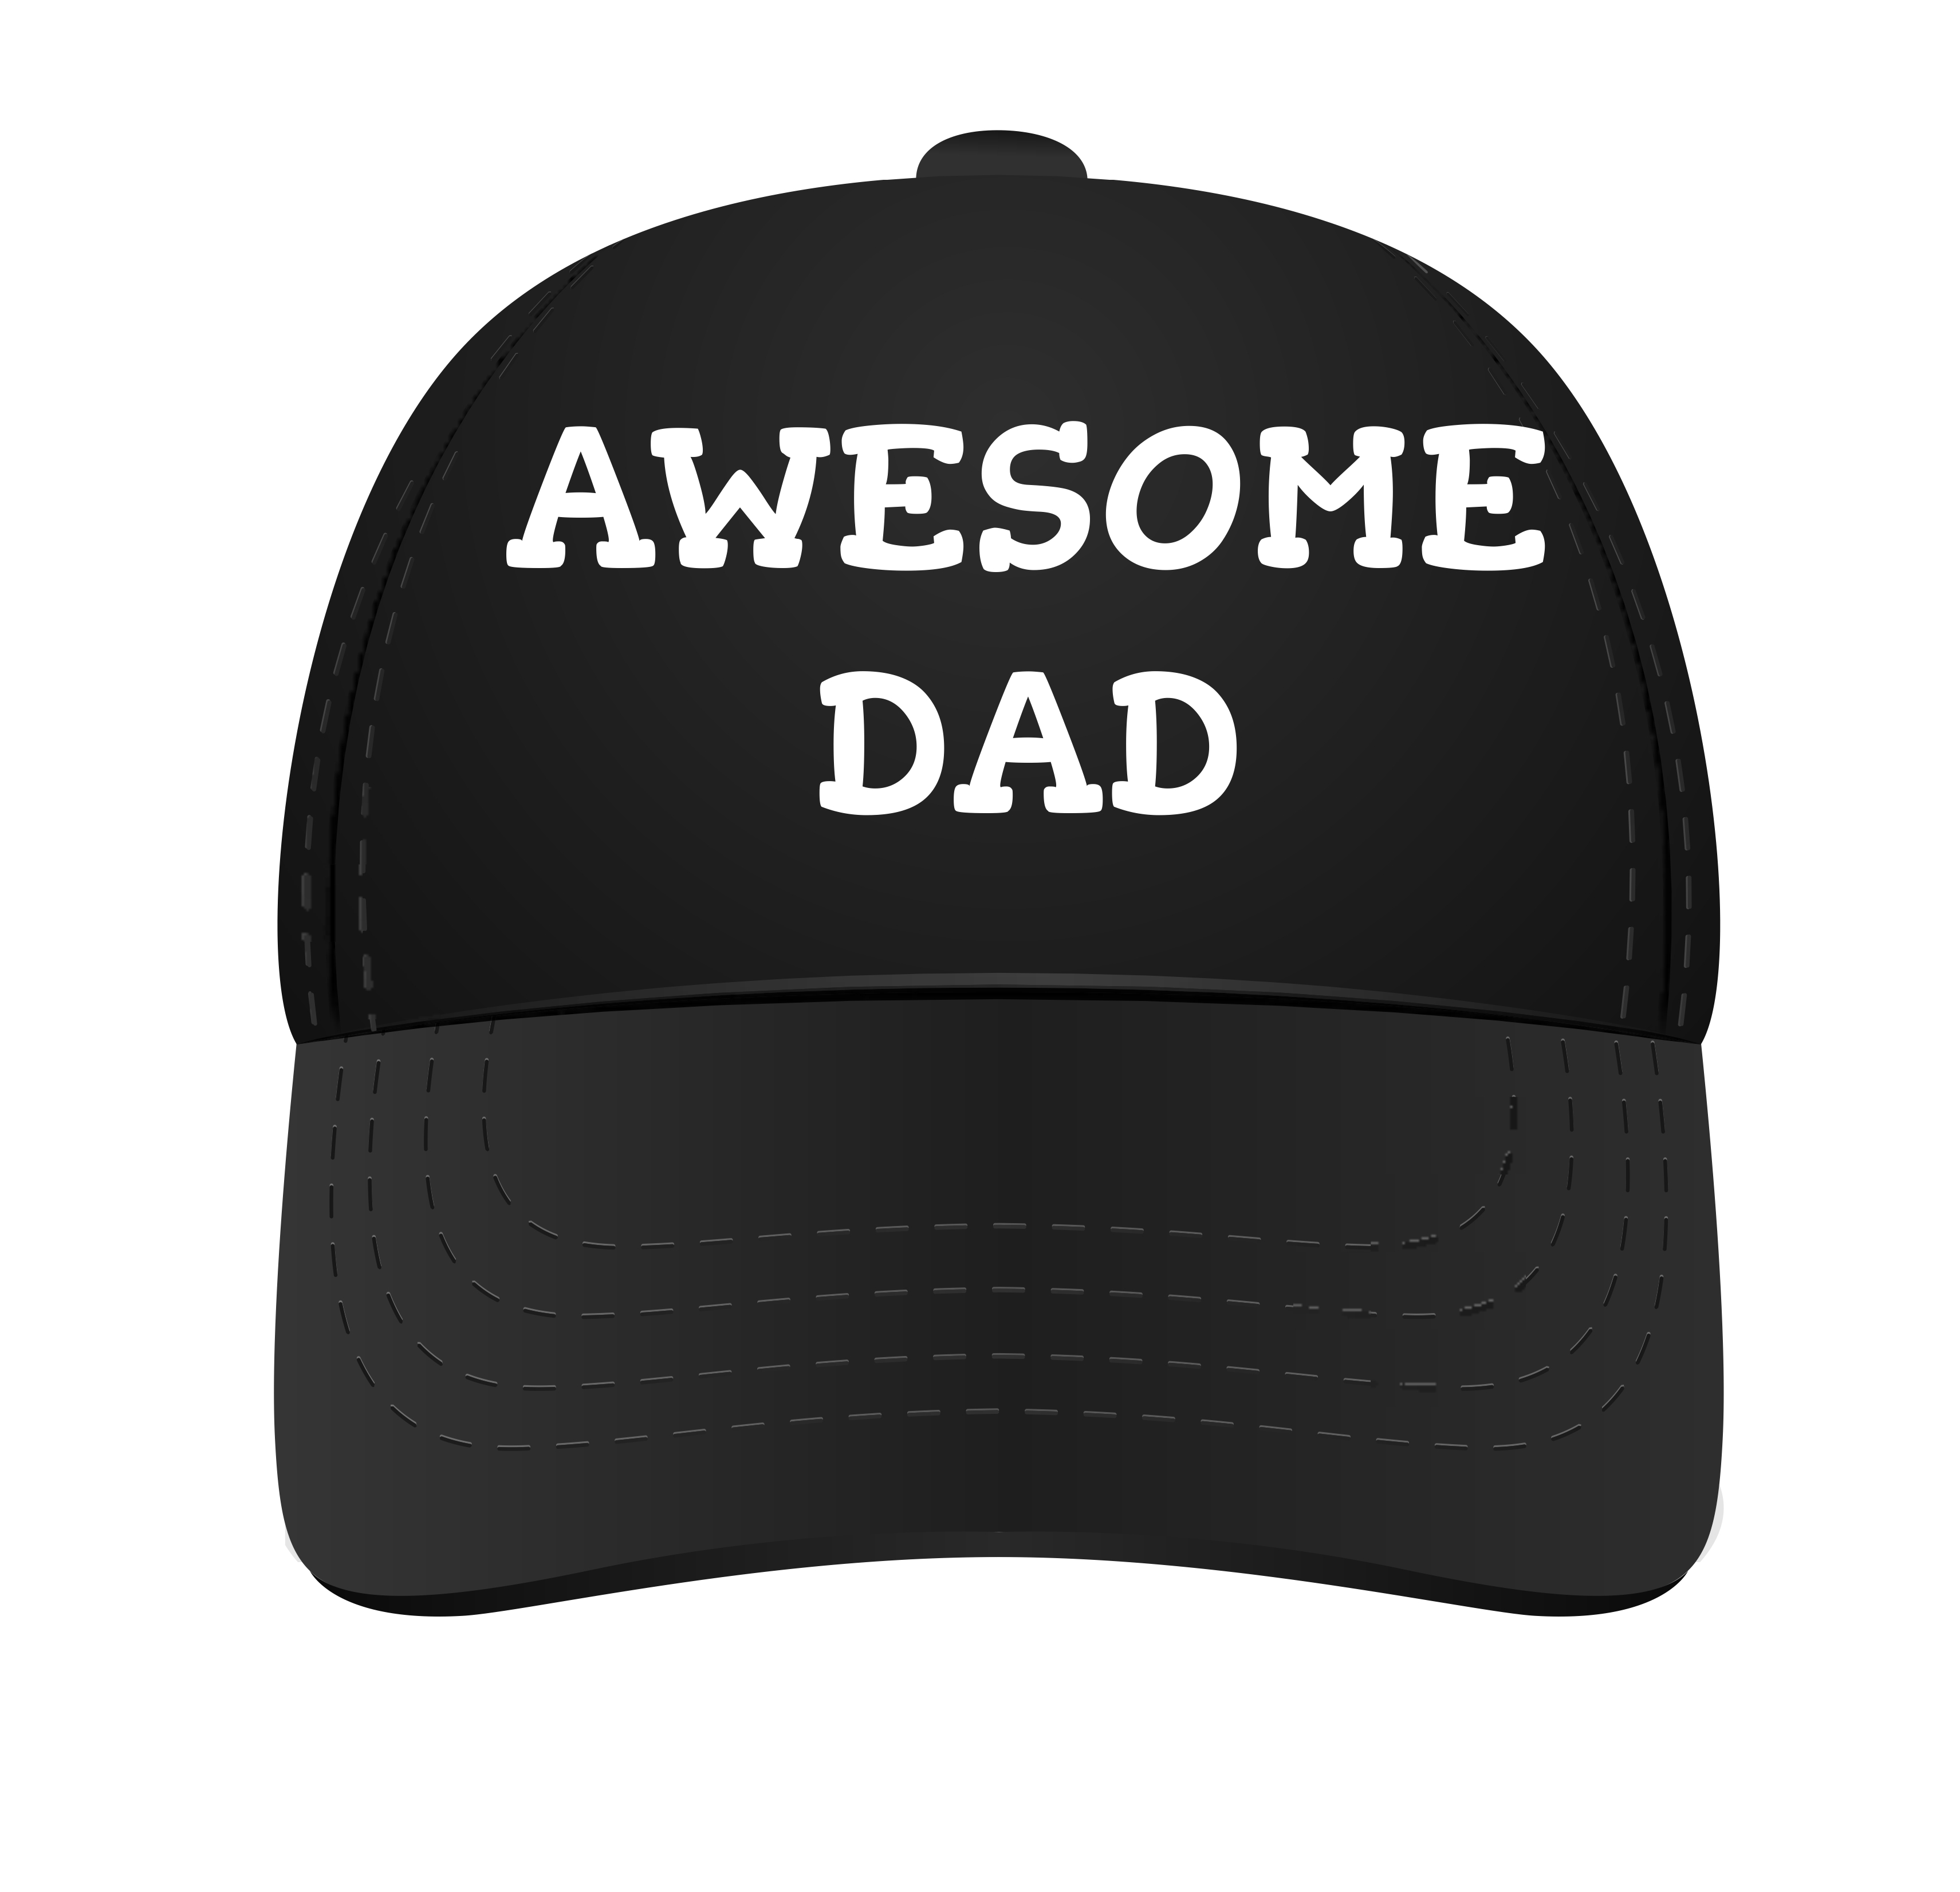 Pet Awesome dad geweldige vader cap